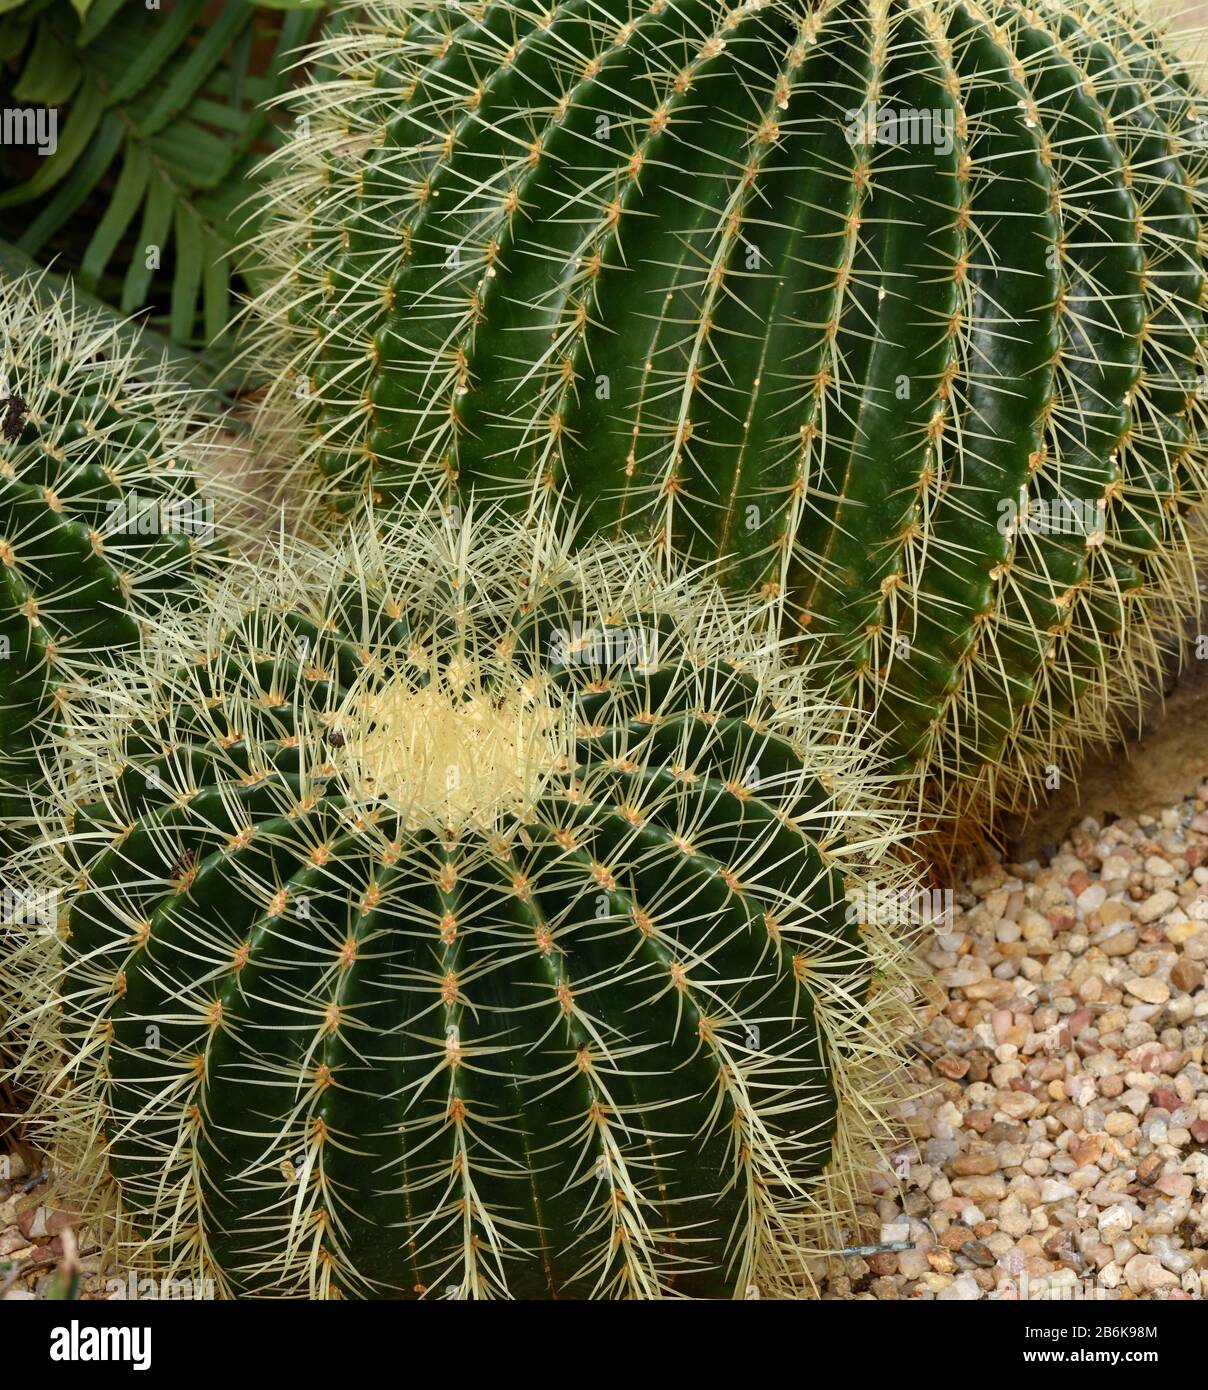 A closeup of the Golden Barrel cactus. Stock Photo